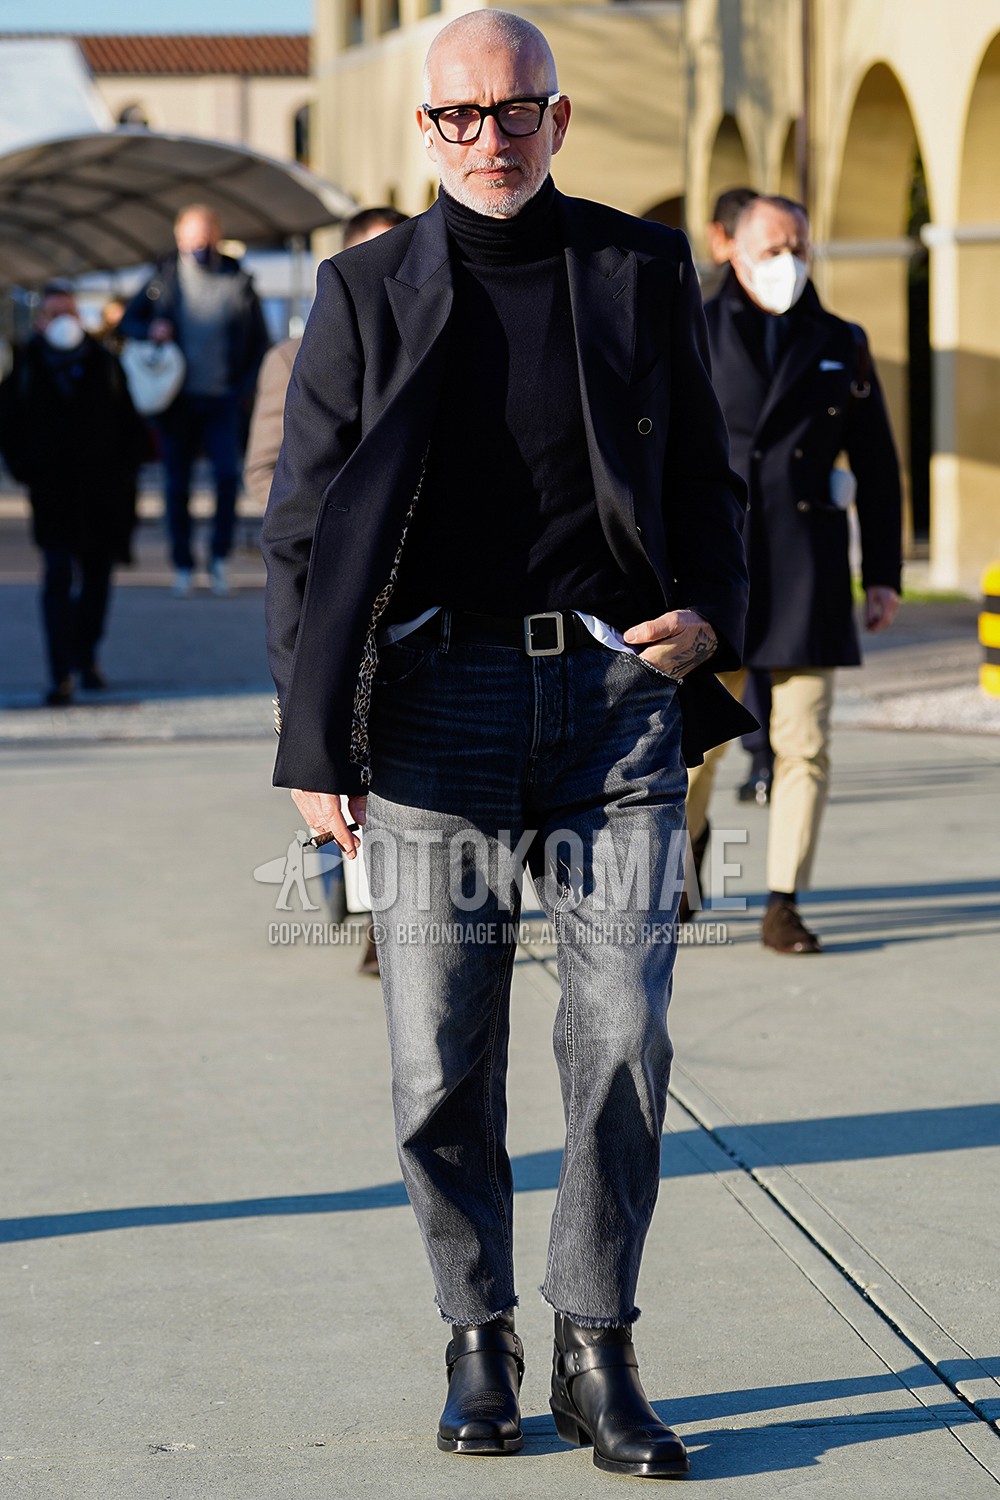 Men's spring winter outfit with black plain glasses, navy plain tailored jacket, navy plain turtleneck knit, black plain leather belt, gray plain denim/jeans, black  boots.